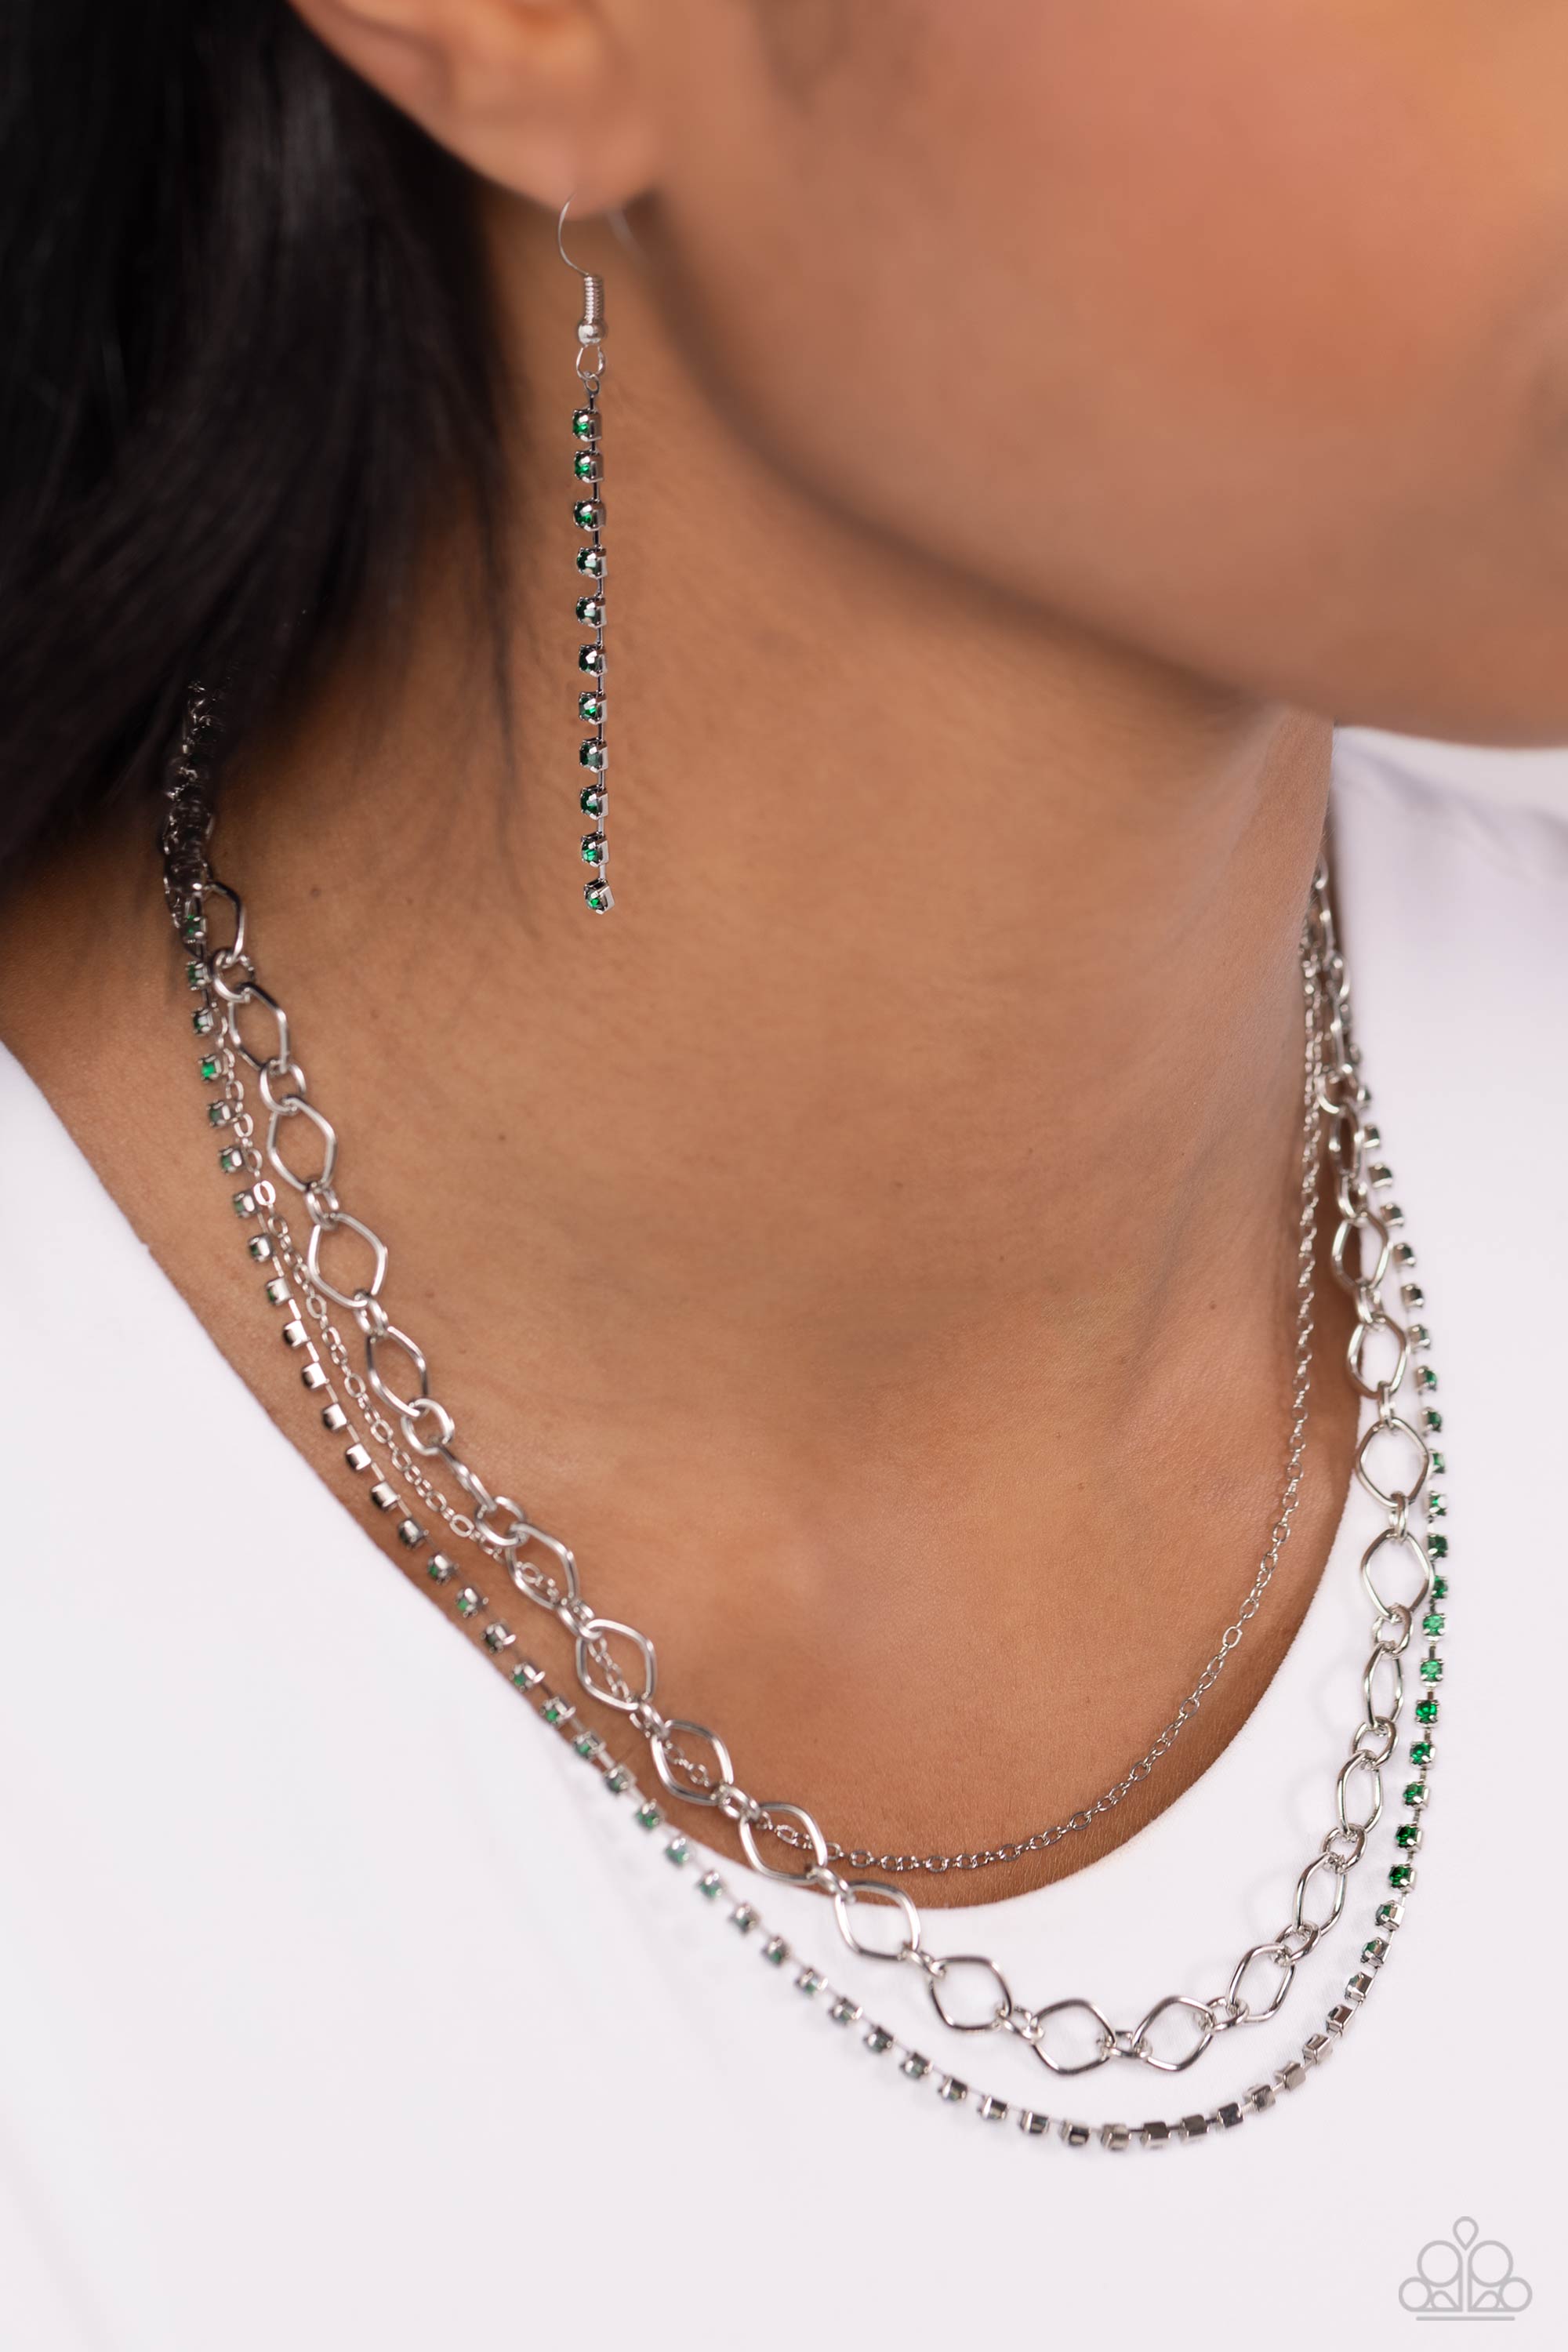 Tasteful Tiers Green Rhinestone Necklace - Paparazzi Accessories- lightbox - CarasShop.com - $5 Jewelry by Cara Jewels